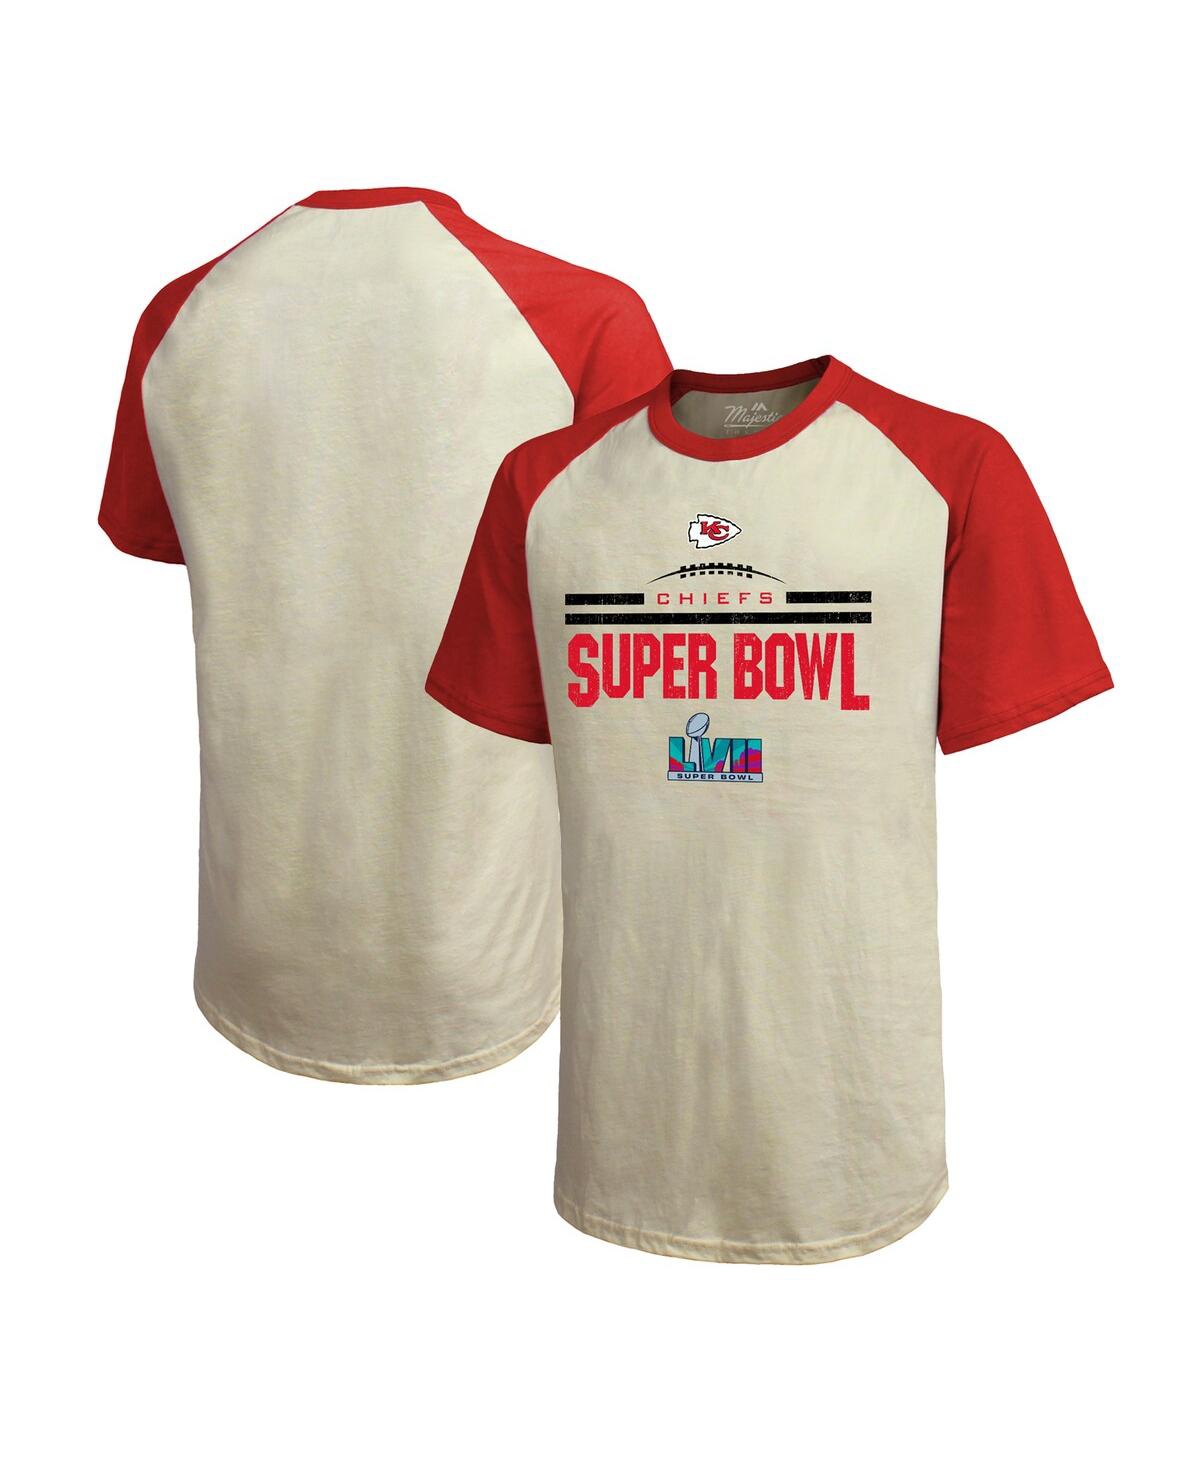 Men's Majestic Threads Cream, Red Kansas City Chiefs Super Bowl Lvii Goal Line Stand Raglan T-shirt - Cream, Red